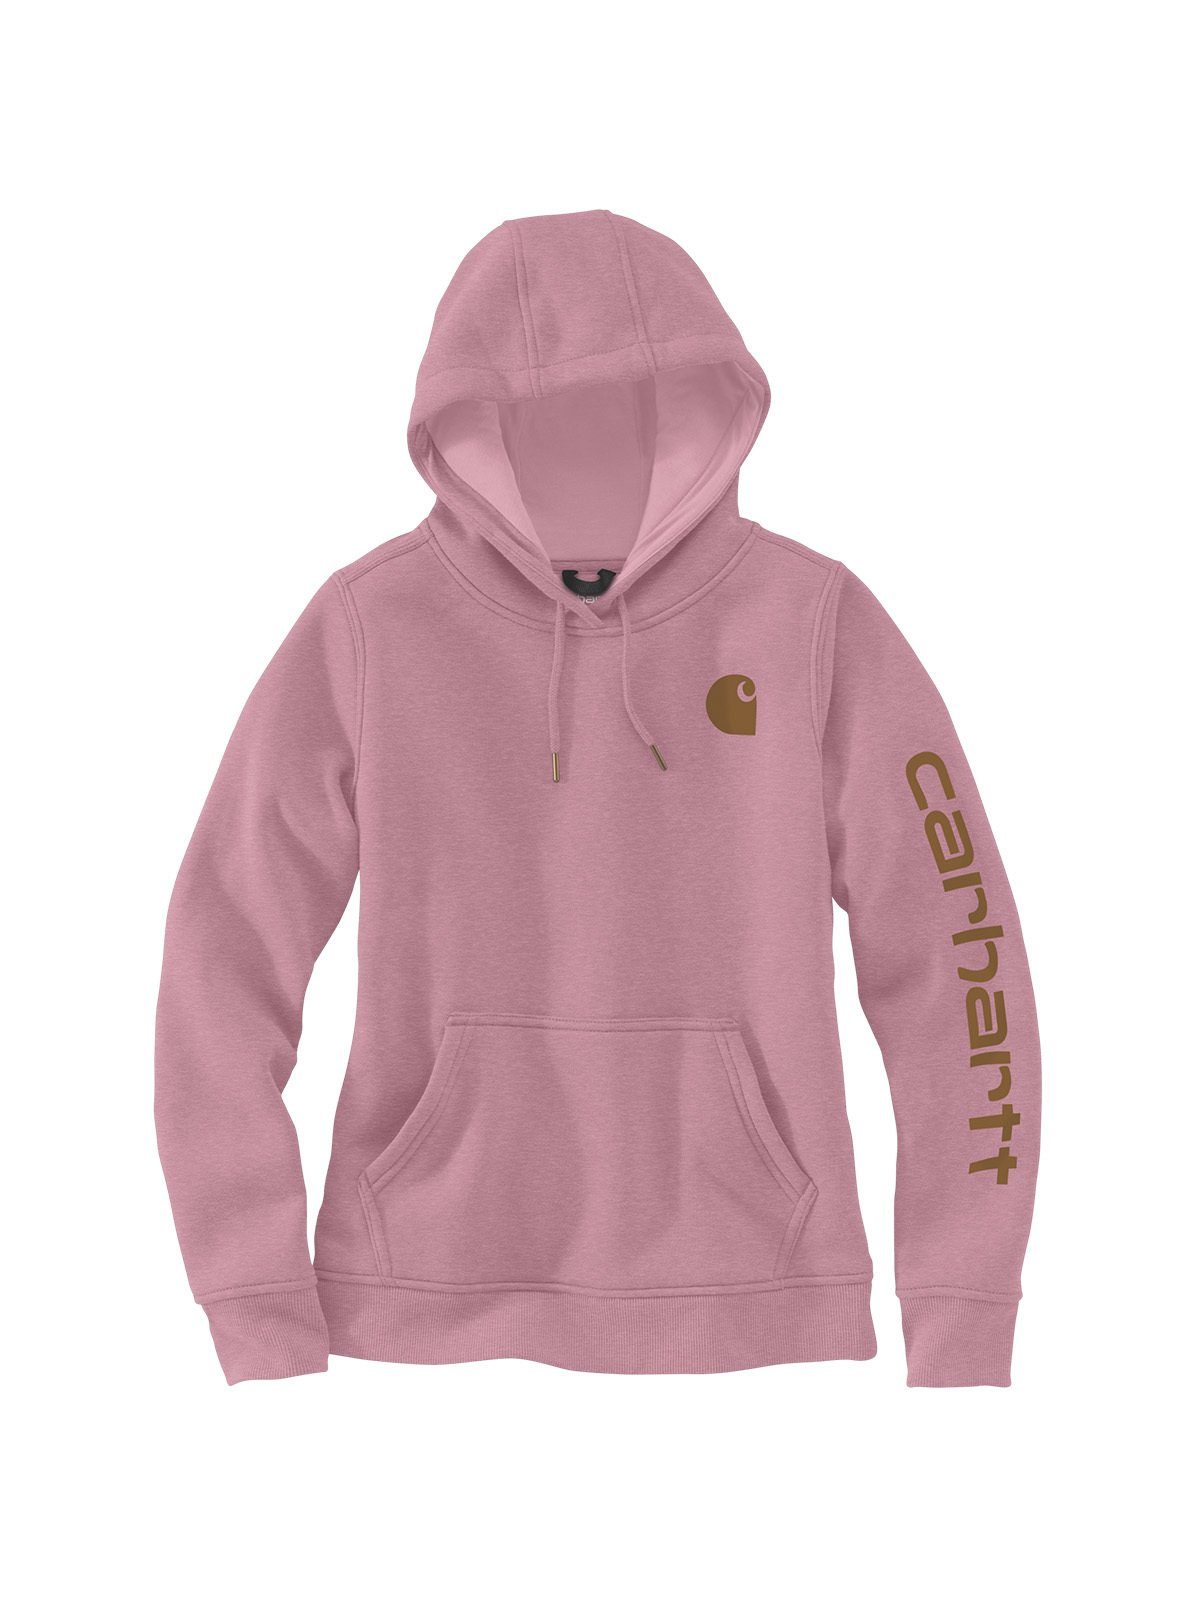 foxglove Sweatshirt Carhartt heather LogoSleeve Carhartt Pink Graphic Kapuzensweatshirt